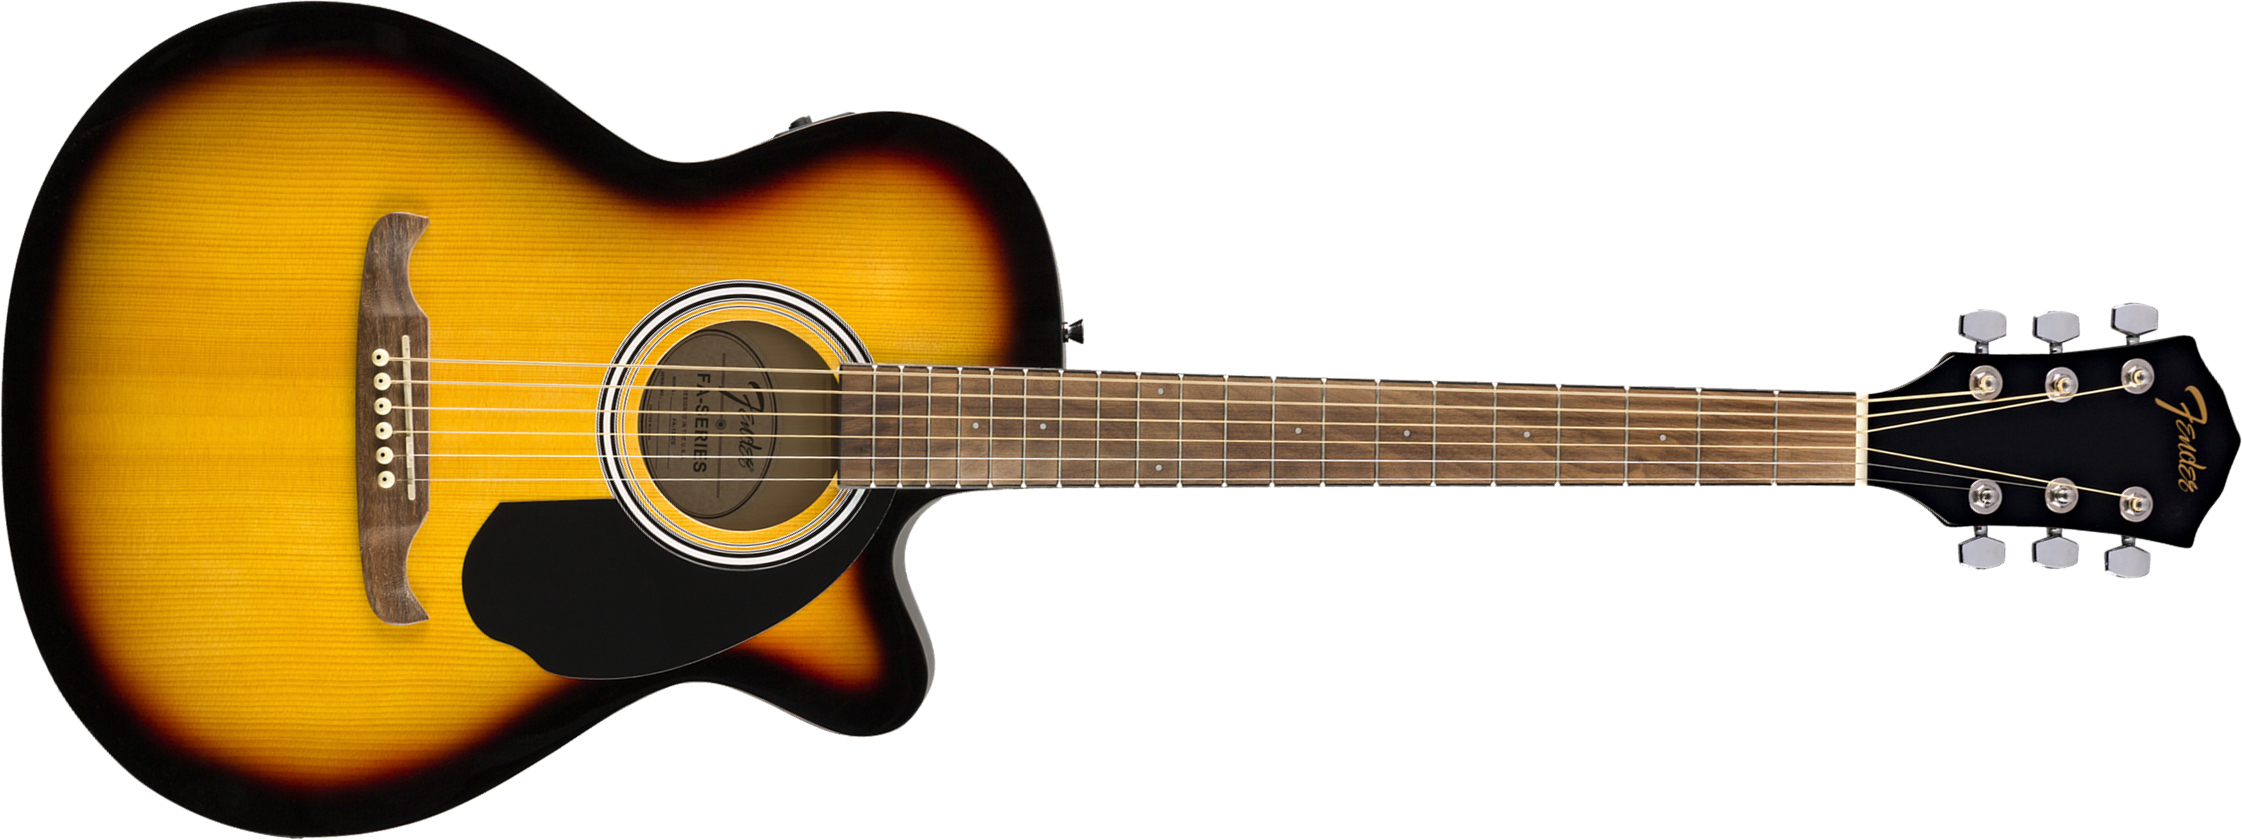 Fender Fa-135ce Concert Cw Epicea Tilleul Wal - Sunburst - Elektroakustische Gitarre - Main picture